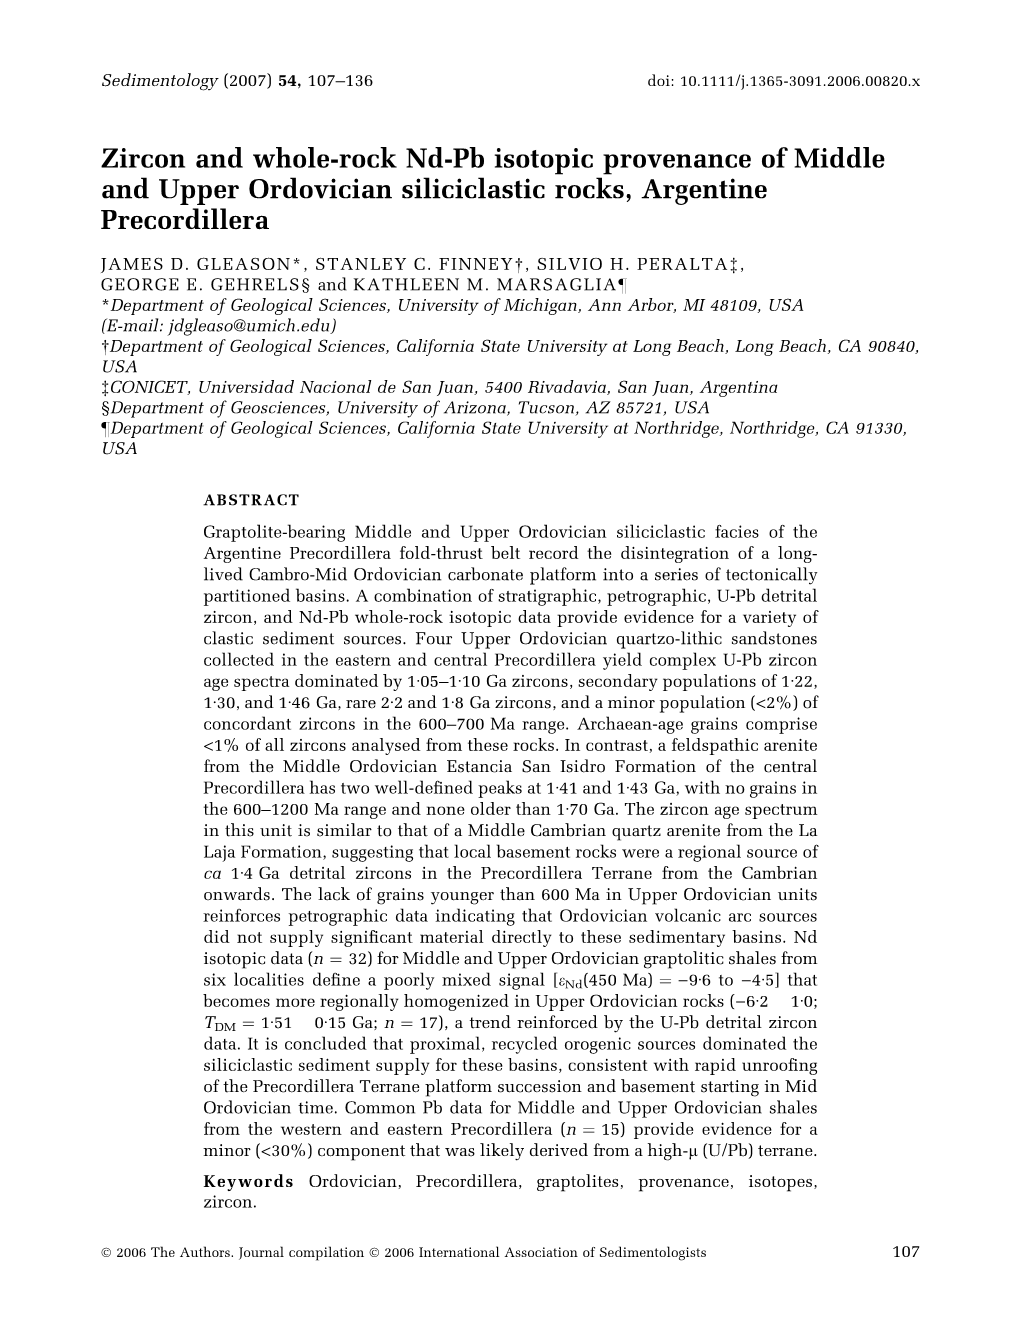 Zircon and Whole-Rock Nd-Pb Isotopic Provenance of Middle and Upper Ordovician Siliciclastic Rocks, Argentine Precordillera